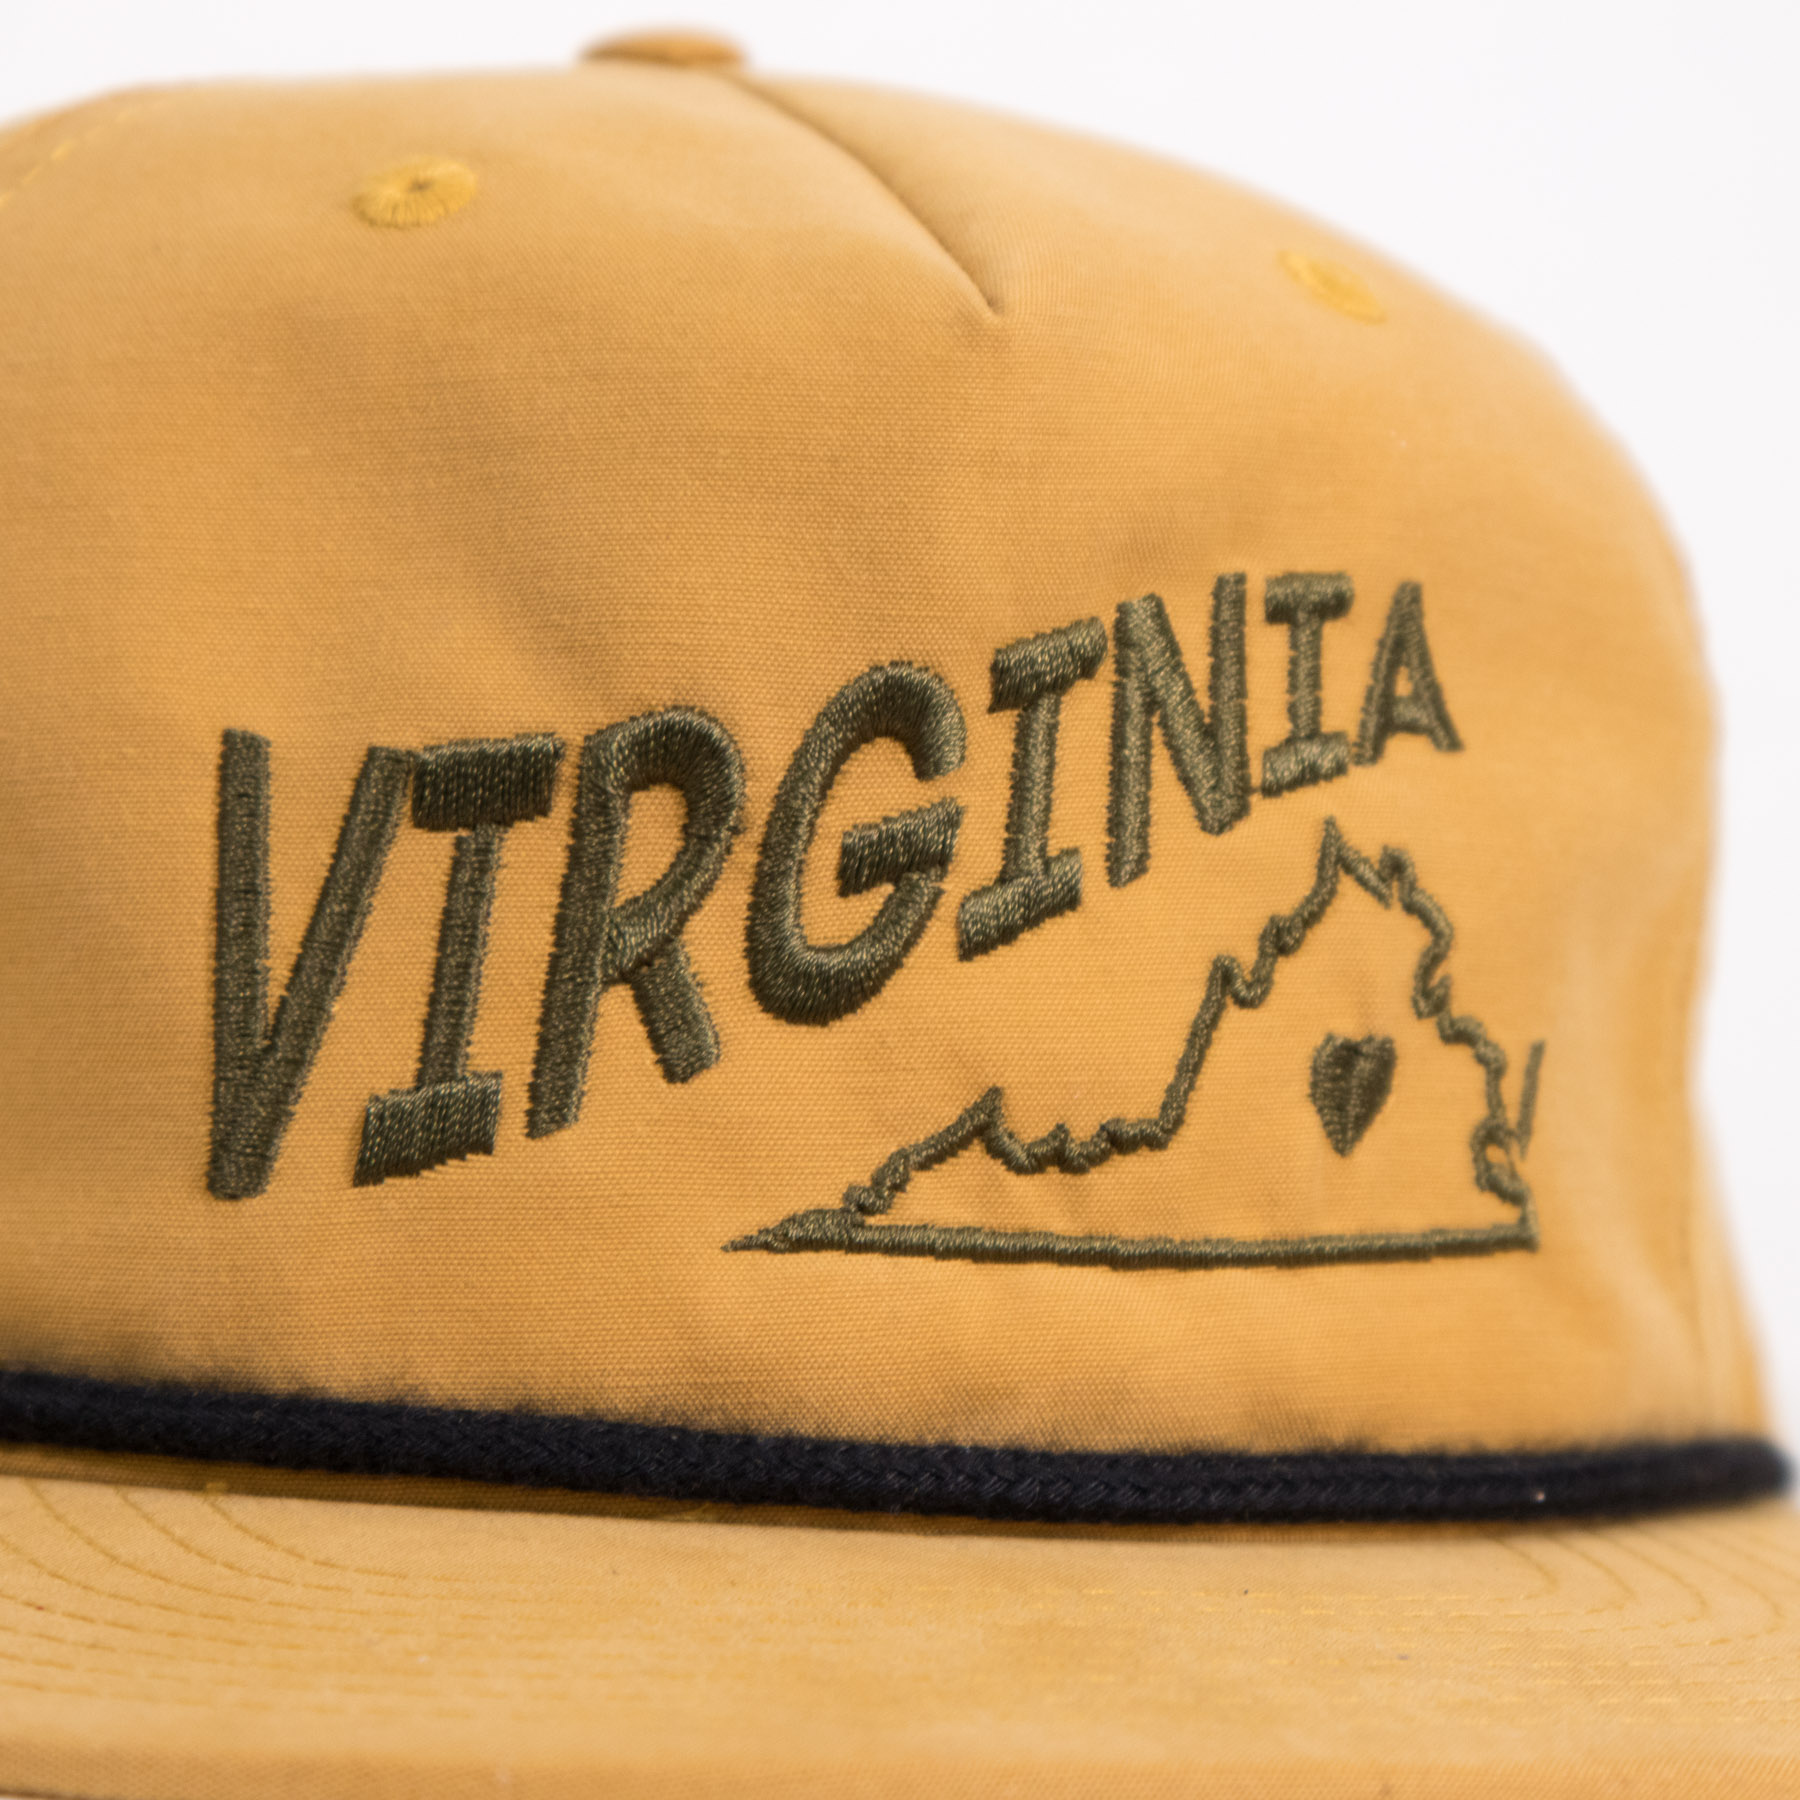 Virginia grandpa hat - Crewel and Unusual